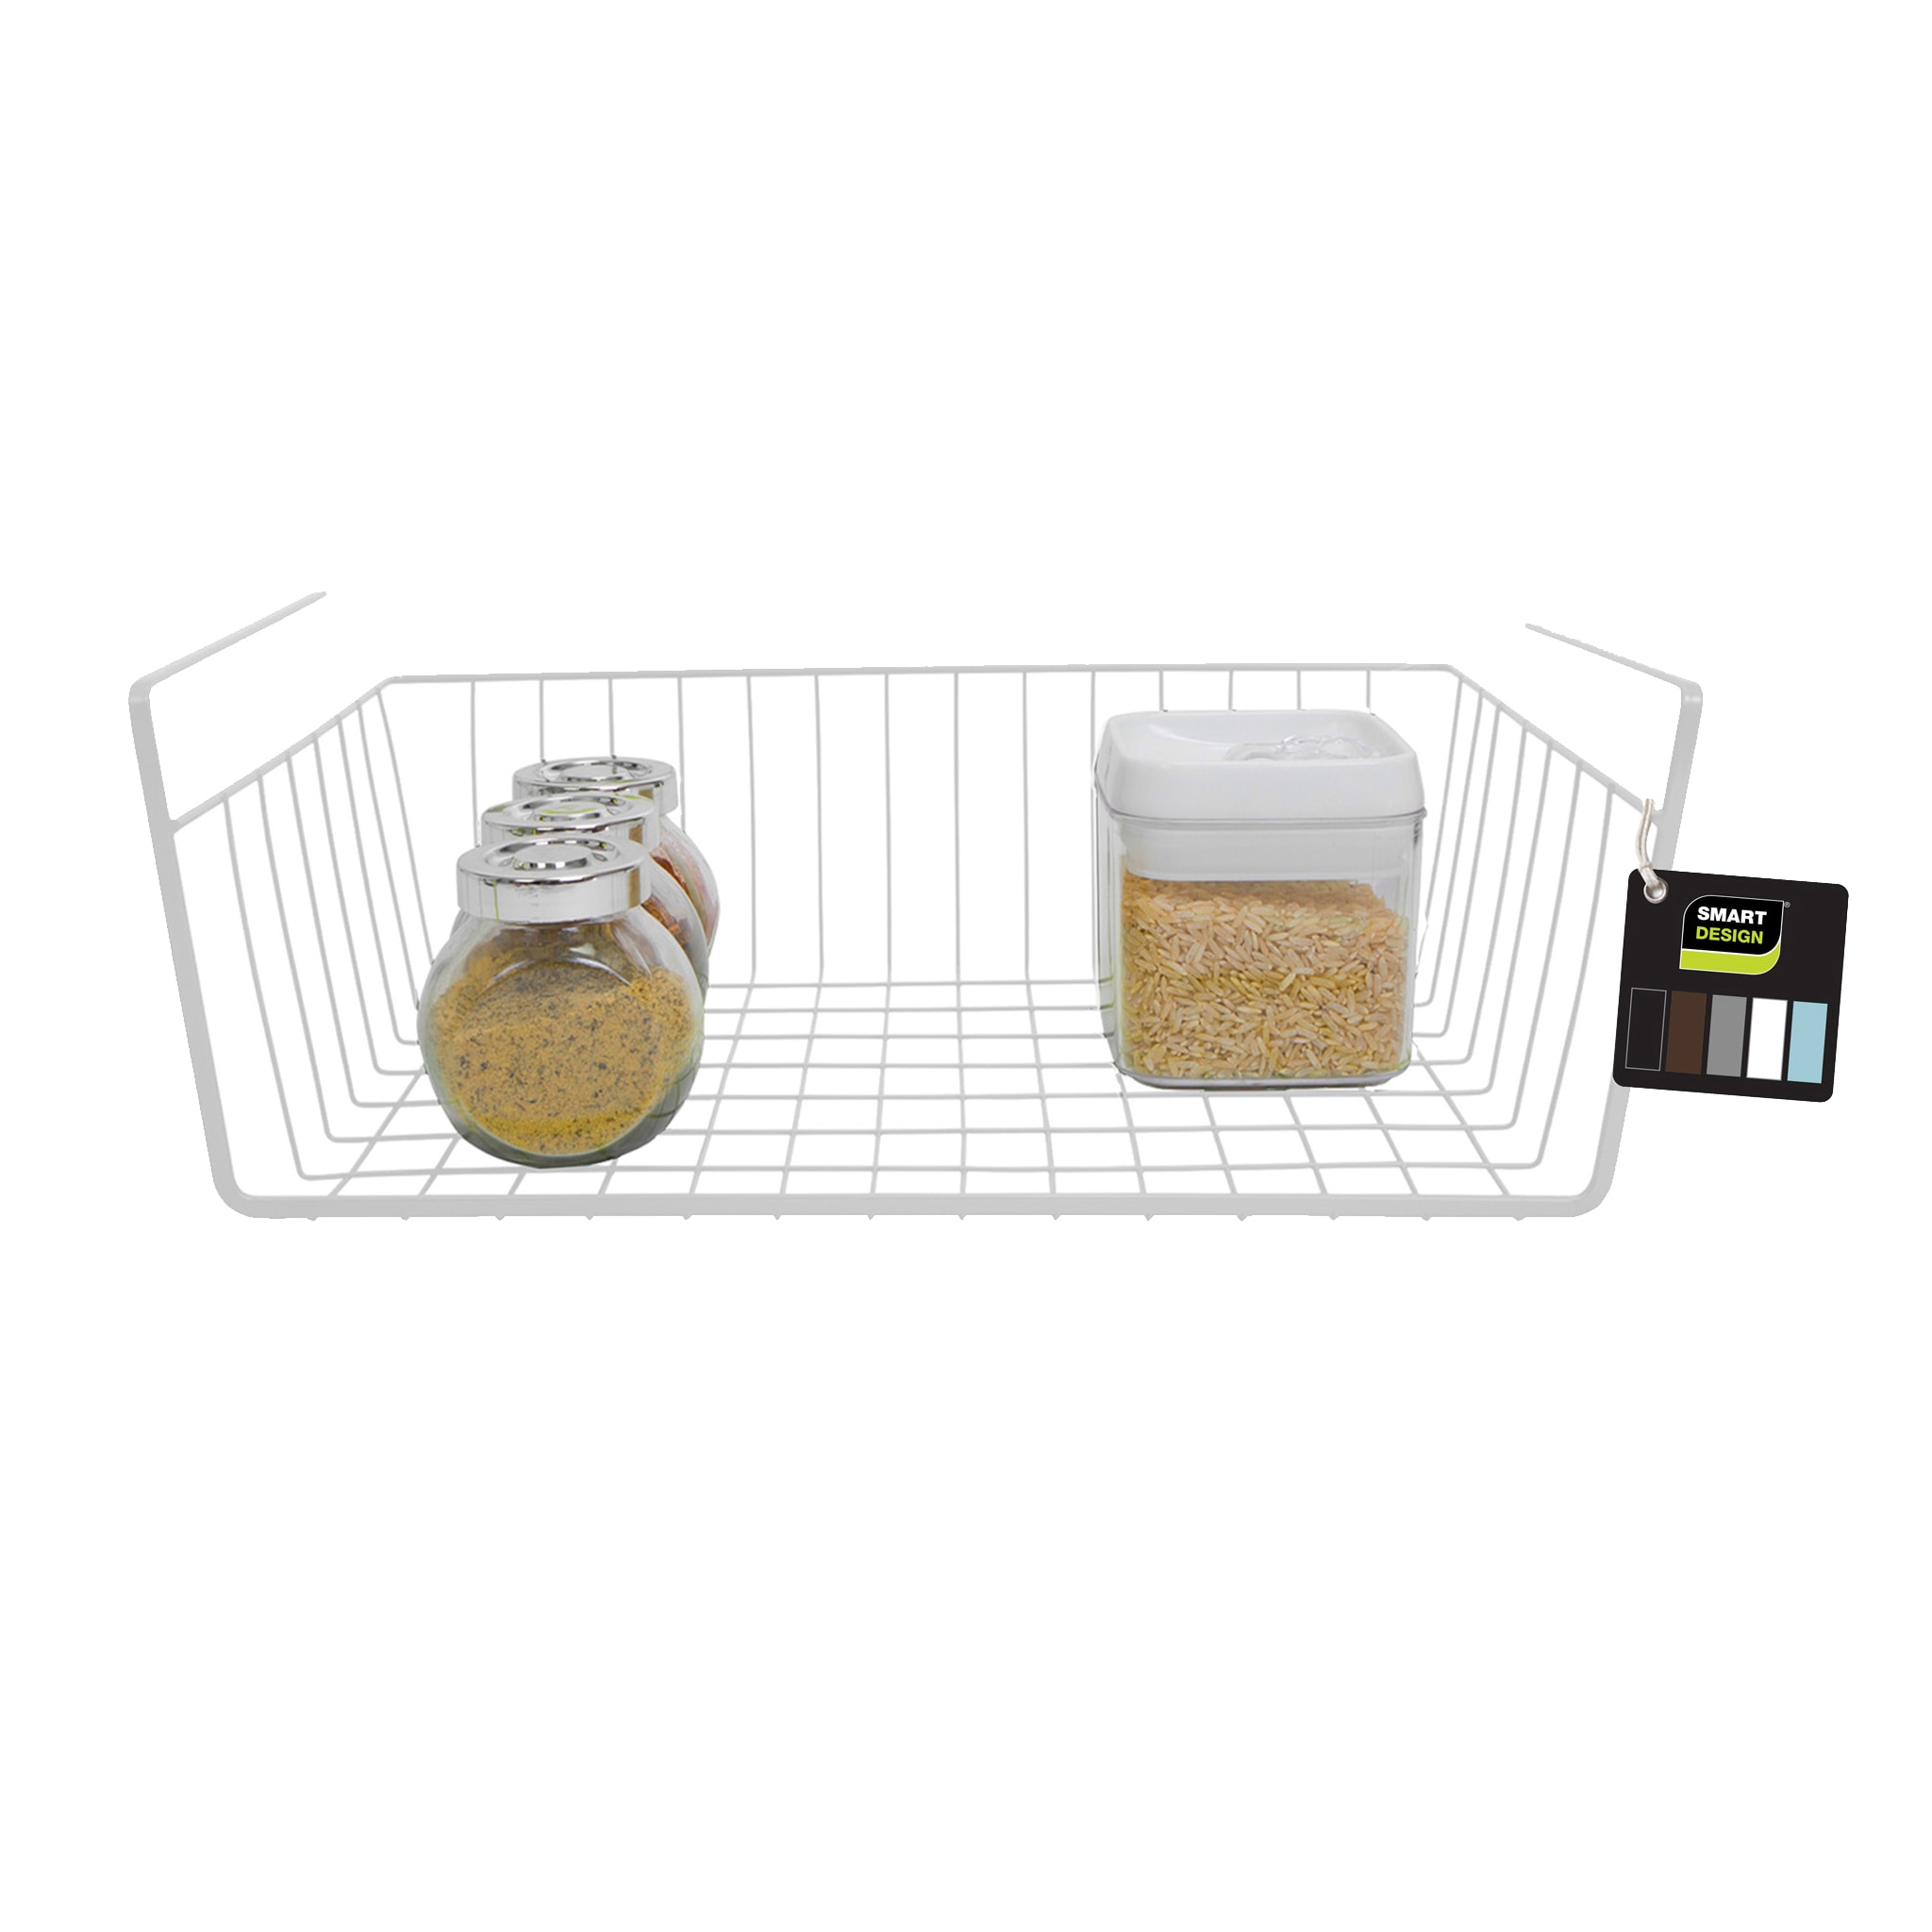 Smart Design Undershelf Storage Basket - Small - Snug Fit Arms - Steel  Metal Wire - Rust Resistant - Under Shelves, Cabinet, Pantry, and Shelf